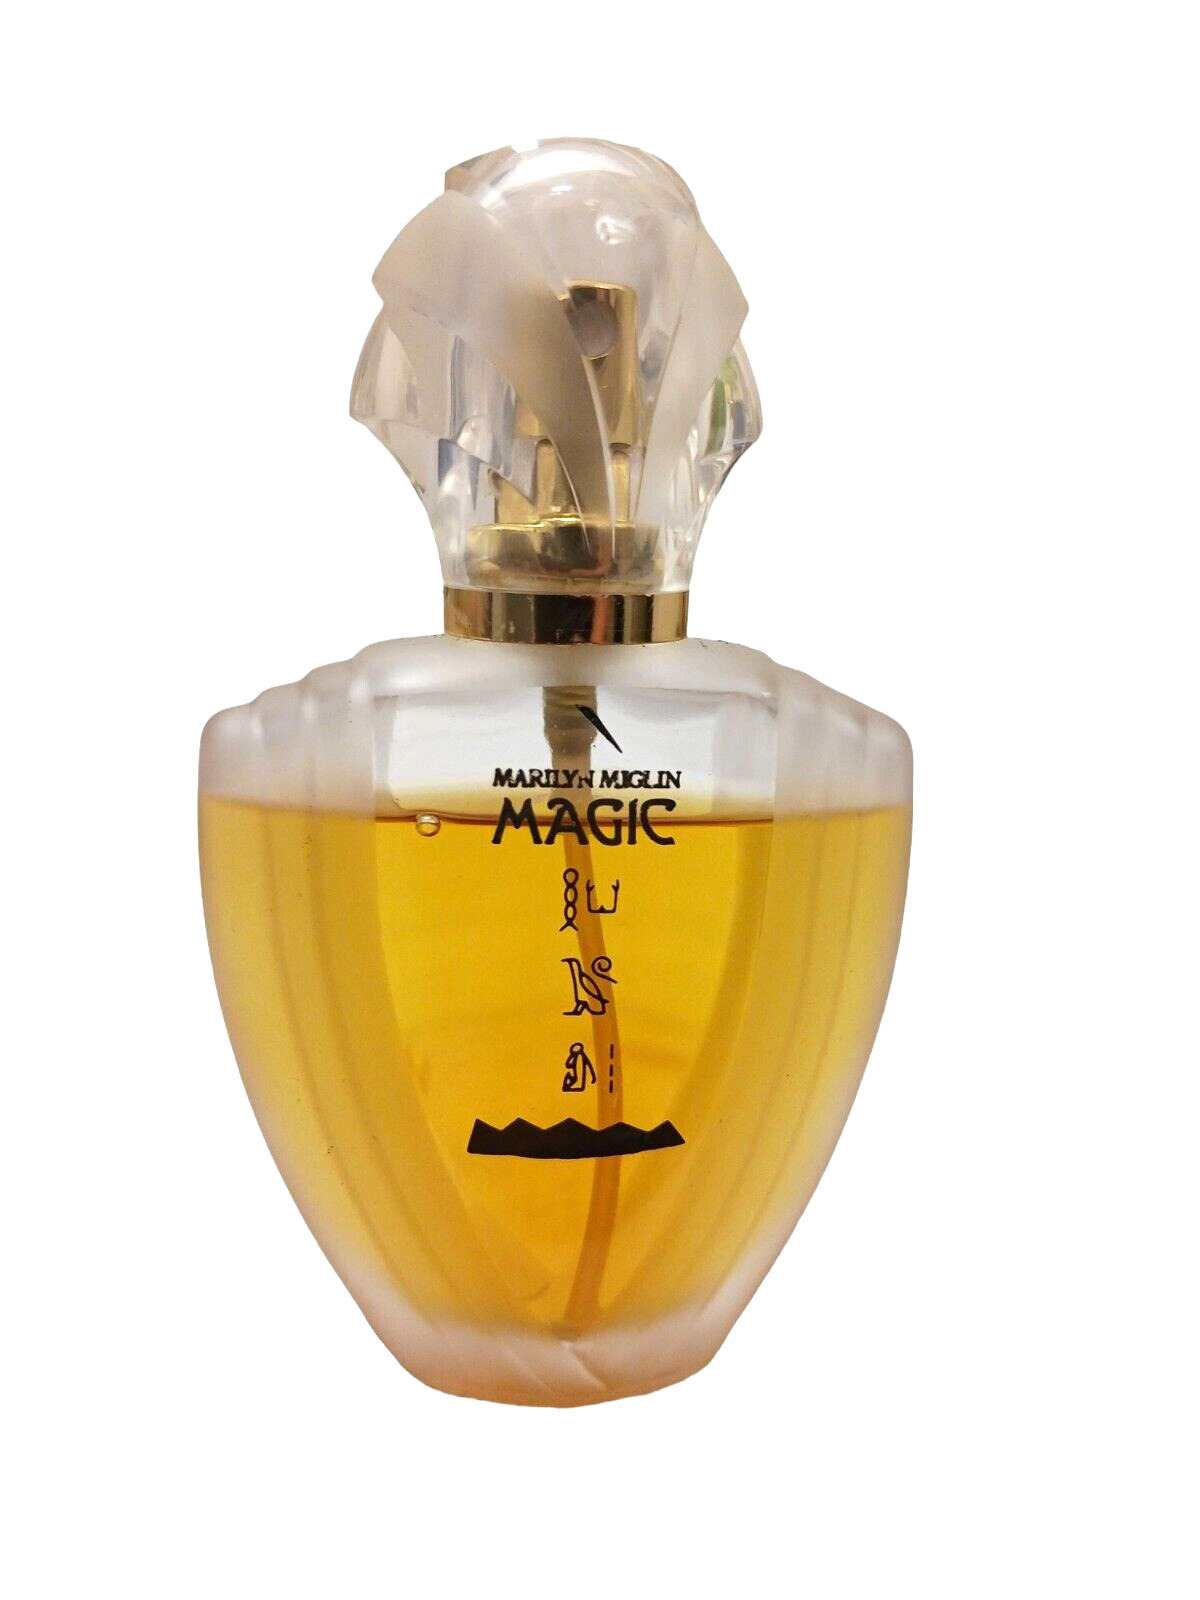 Marilyn Miglin MAGIC 2 oz Eau de Parfum Spray Original 95% FULL Bottle Vintage